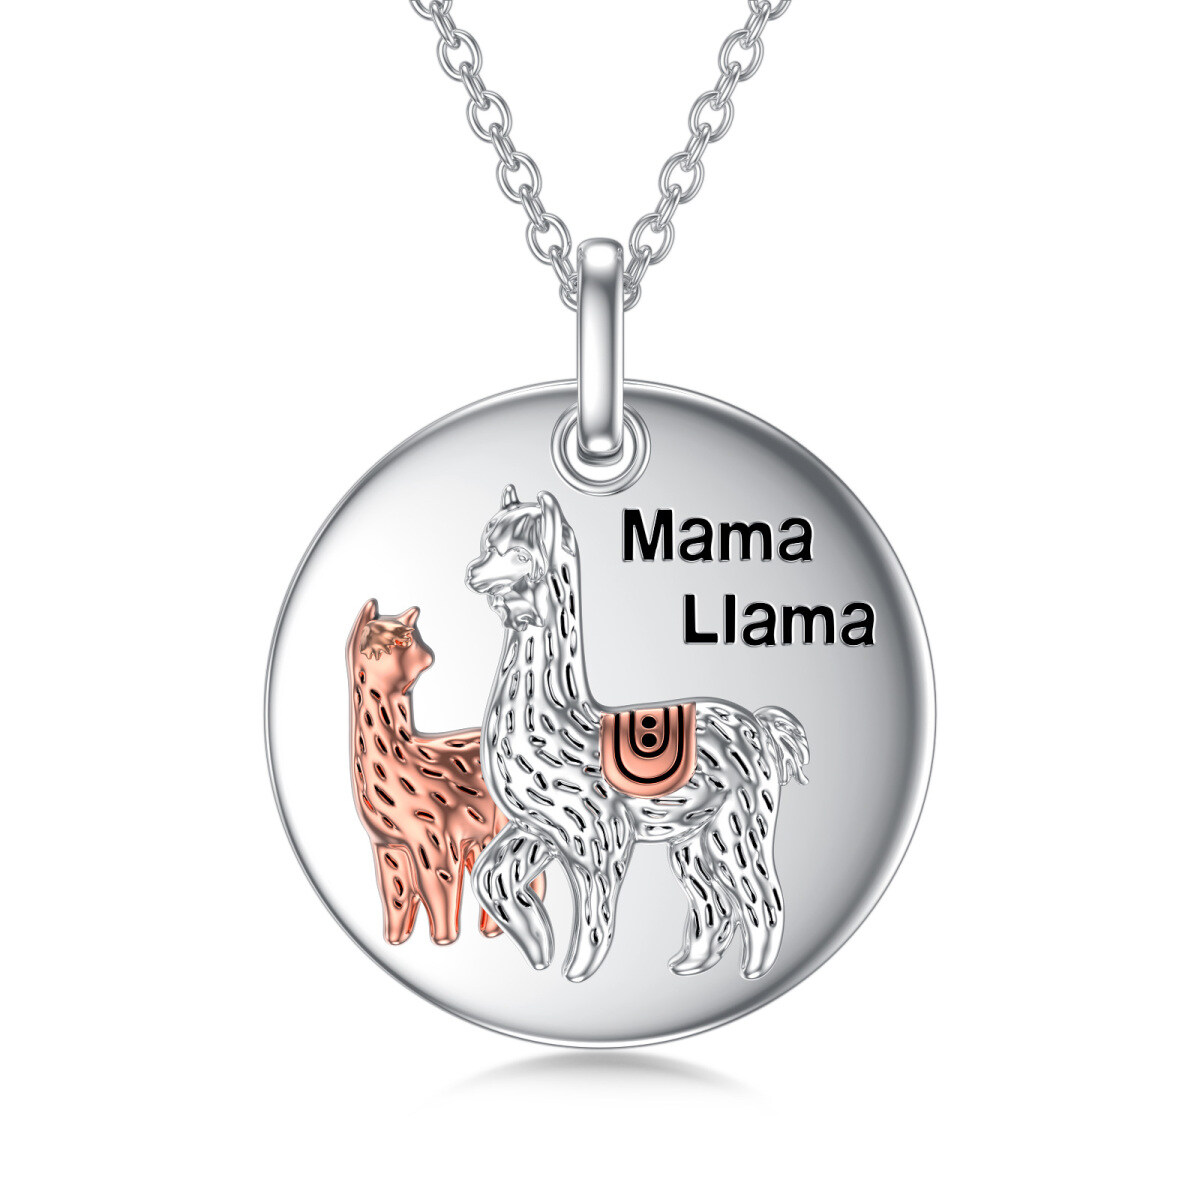 Collier en argent sterling avec pendentif en forme de pièce de monnaie Alpaca Mama Llama bicolore-1